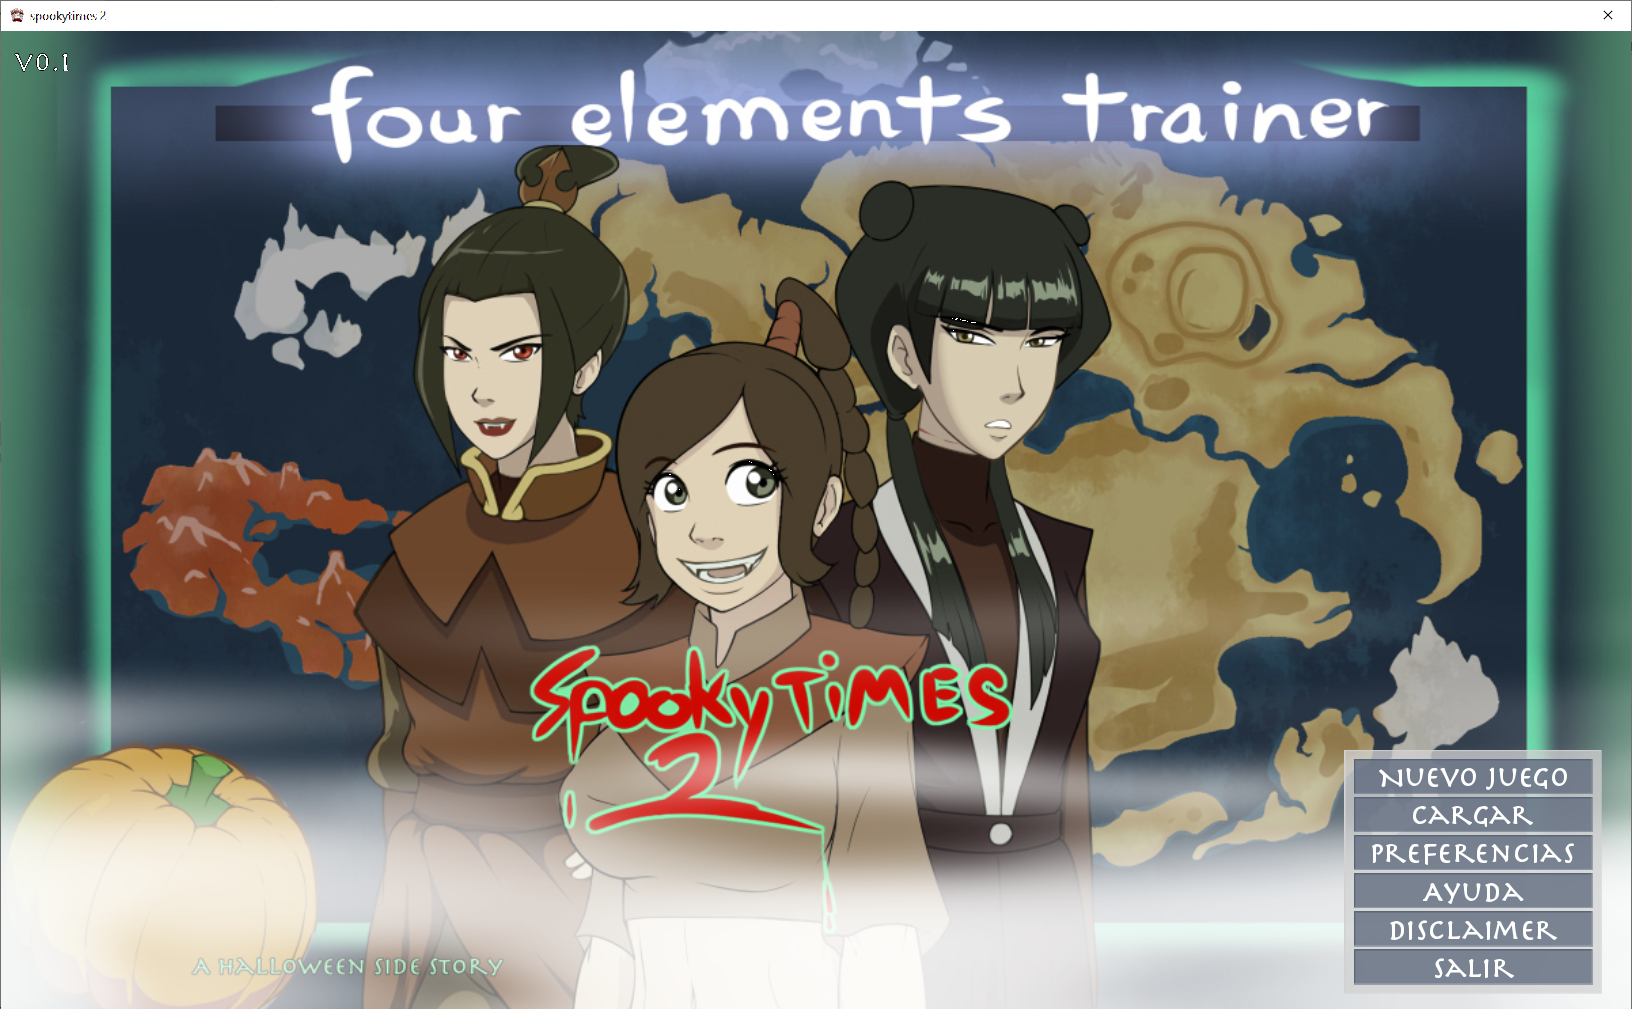 Four elements Trainer Spookytimes 2. Four elements Trainer spookytimes3. 4 Elements Trainer азула. Spooky times 2 - a four elements Side story, Part 2. 4 four element